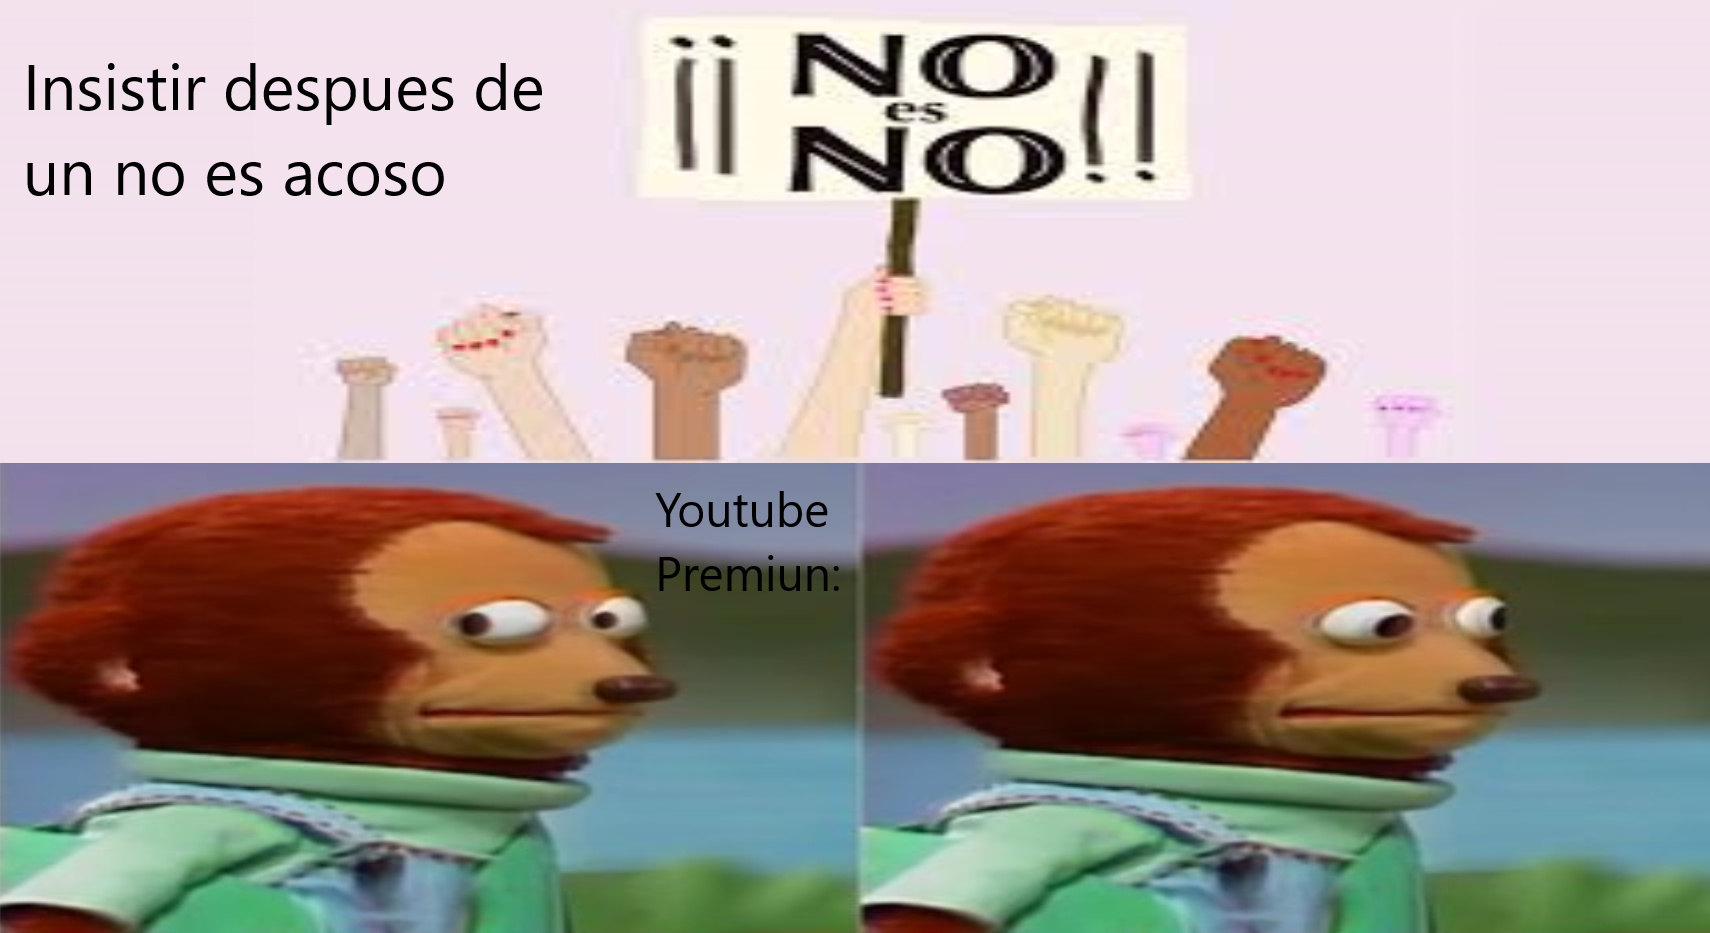 youtube premiun - meme